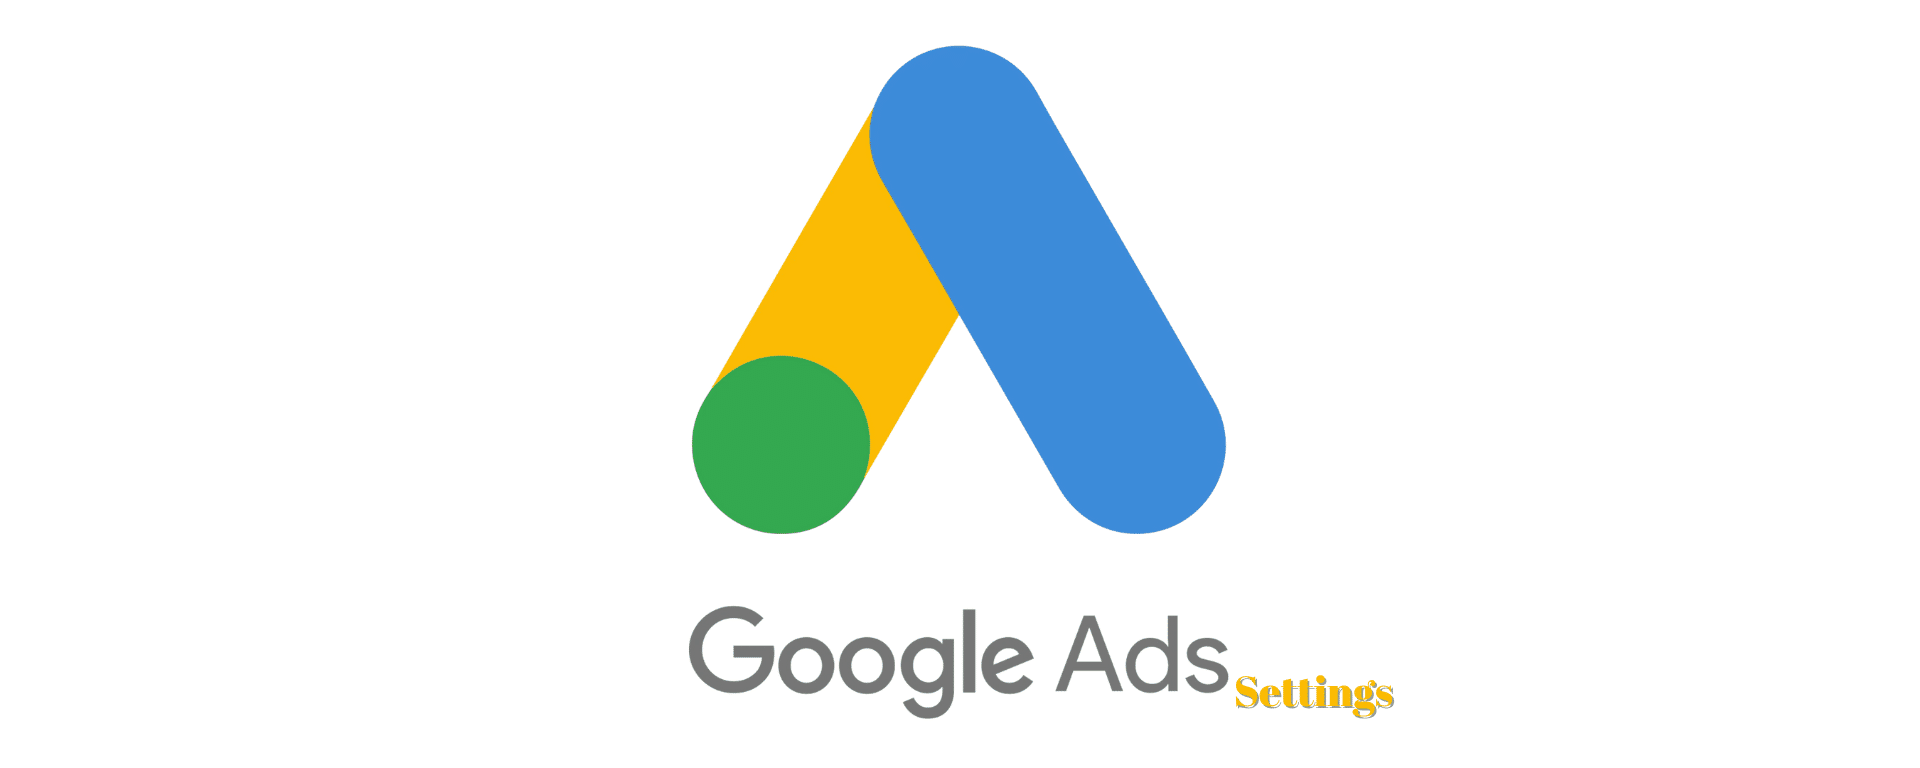 Ads Settings Google em português